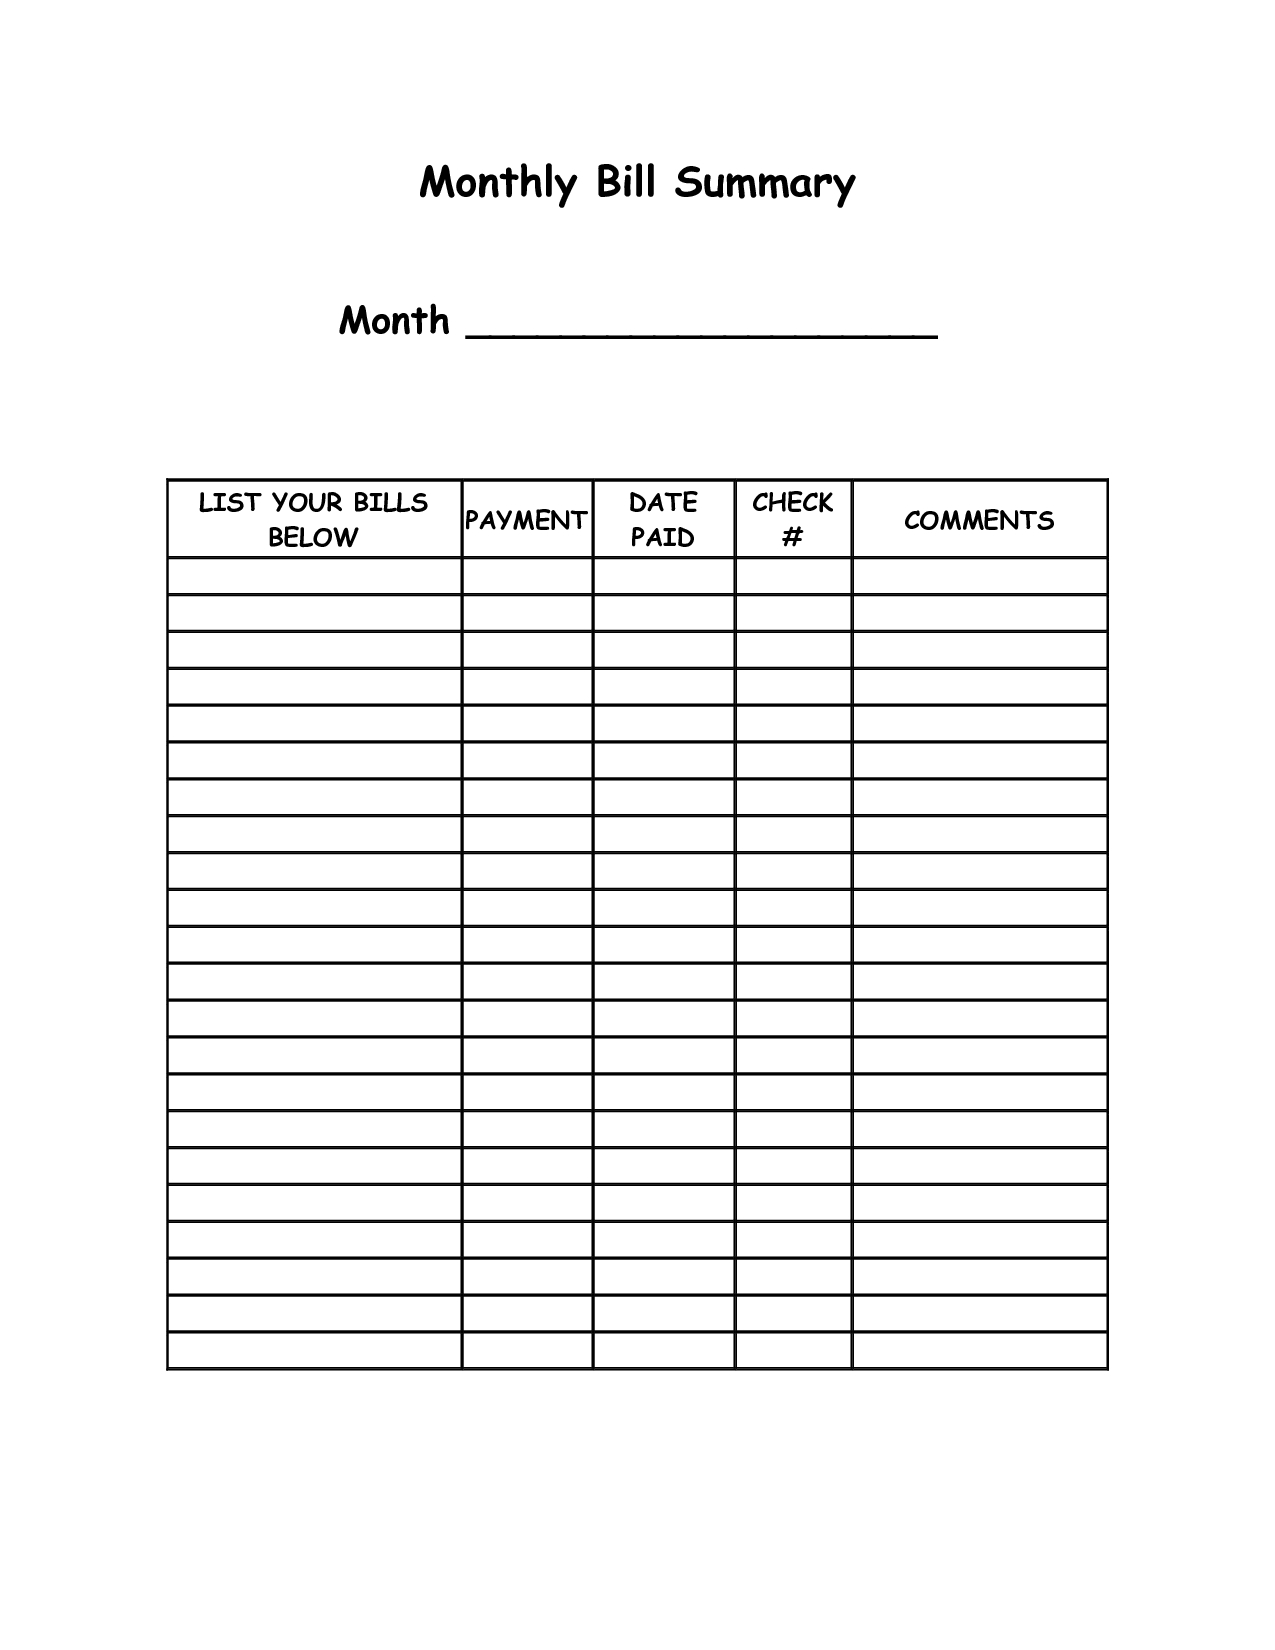 Monthly Bill Summary Doc | Organization | Organizing Monthly-List Of Bills Template